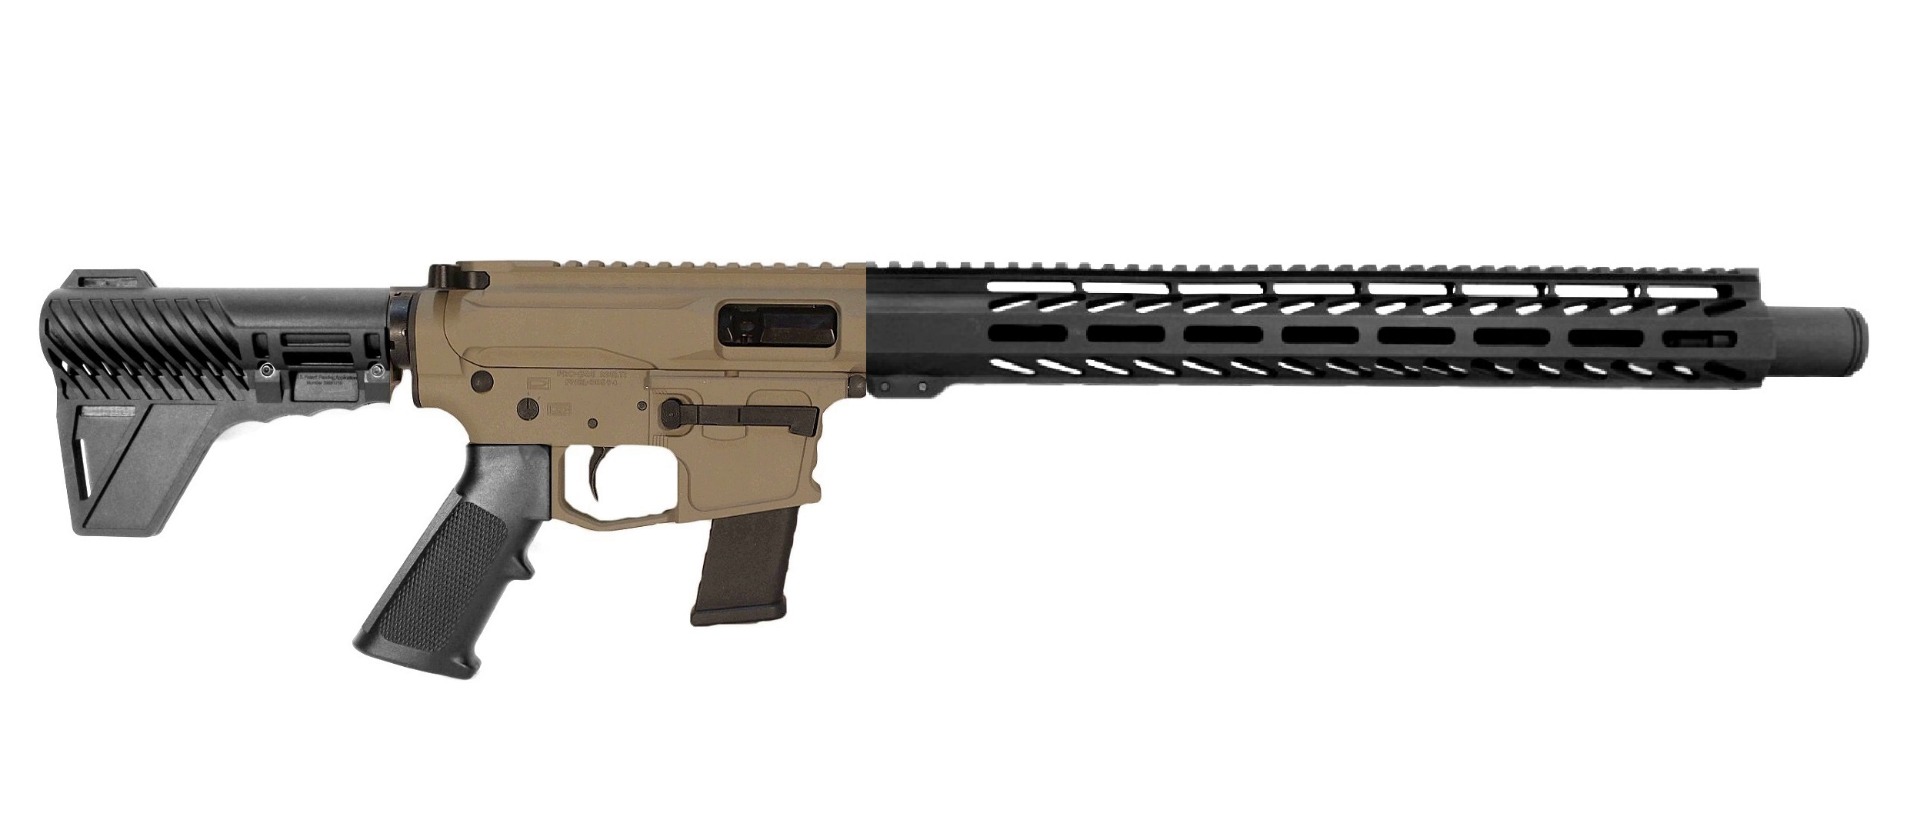 14.5 inch 9mm PCC Pistol in FDE/BLK Color 